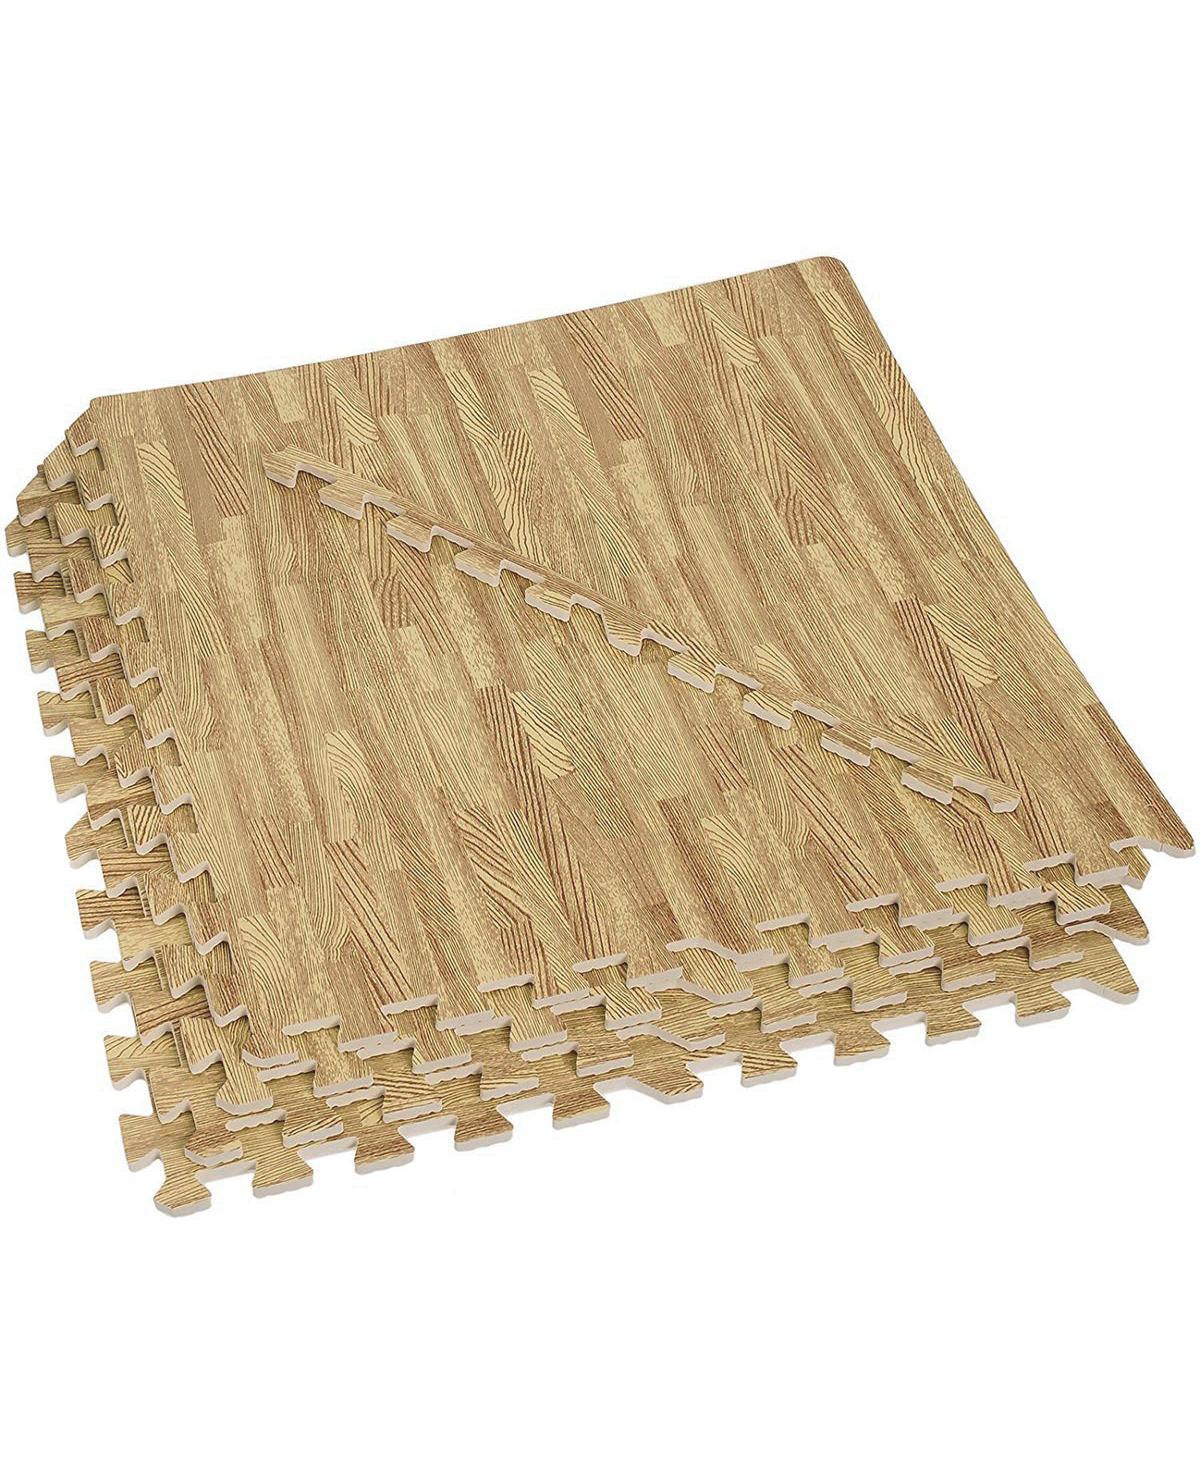 100 SqFt 3/8" Wood Grain Foam Mat Interlocking Tile Flooring 25pcs Oak - Brown